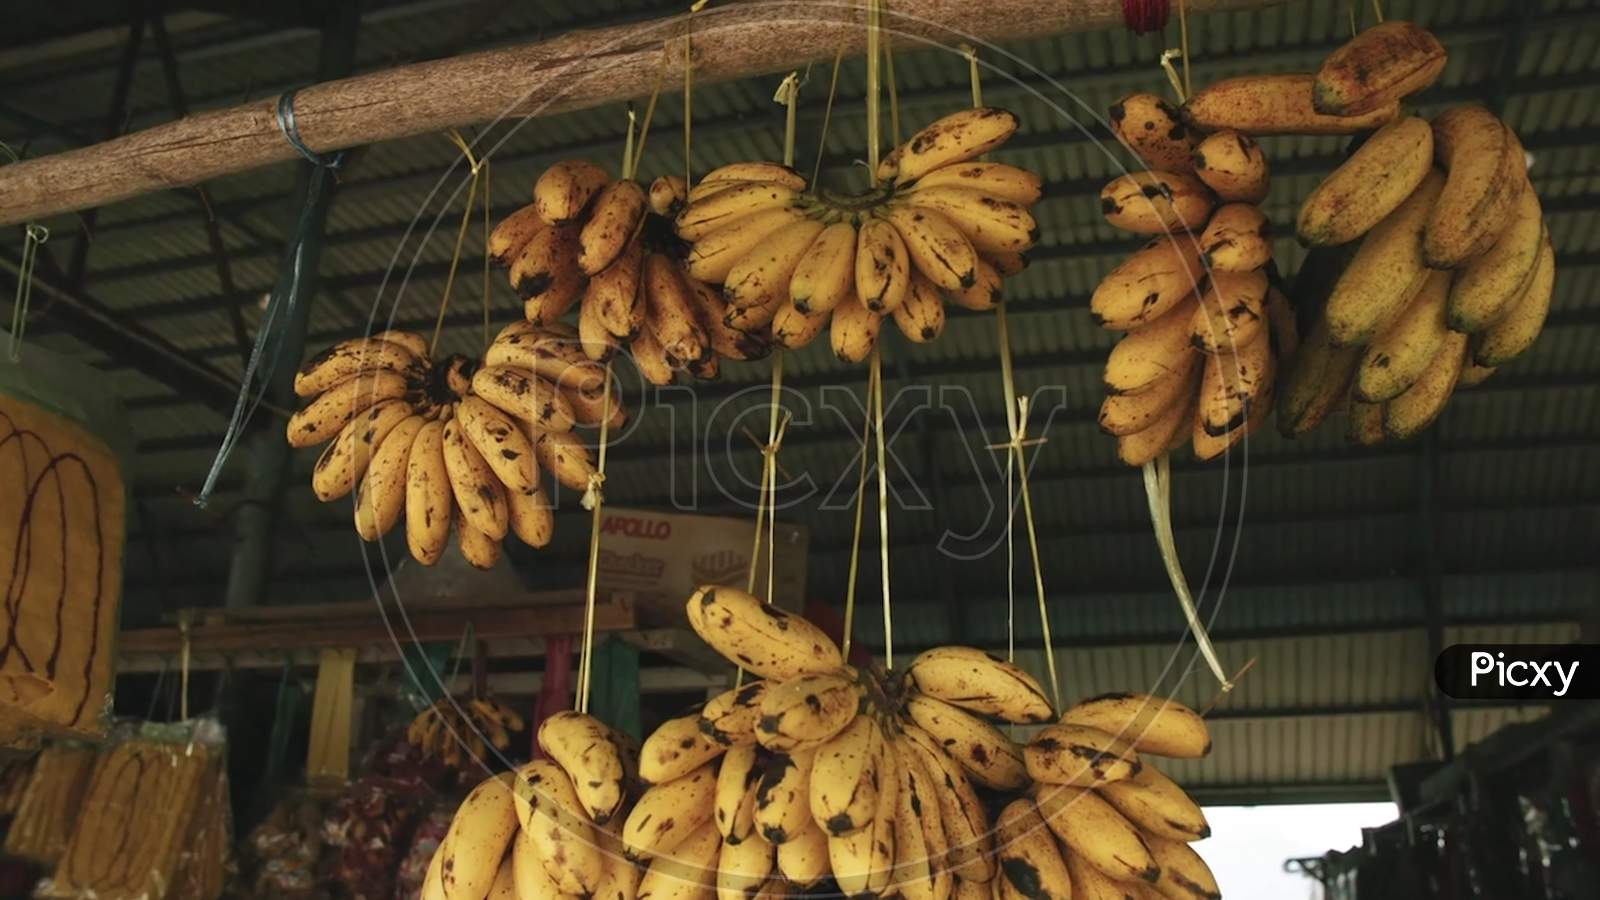 HANGING BANANAS FOR SELLING